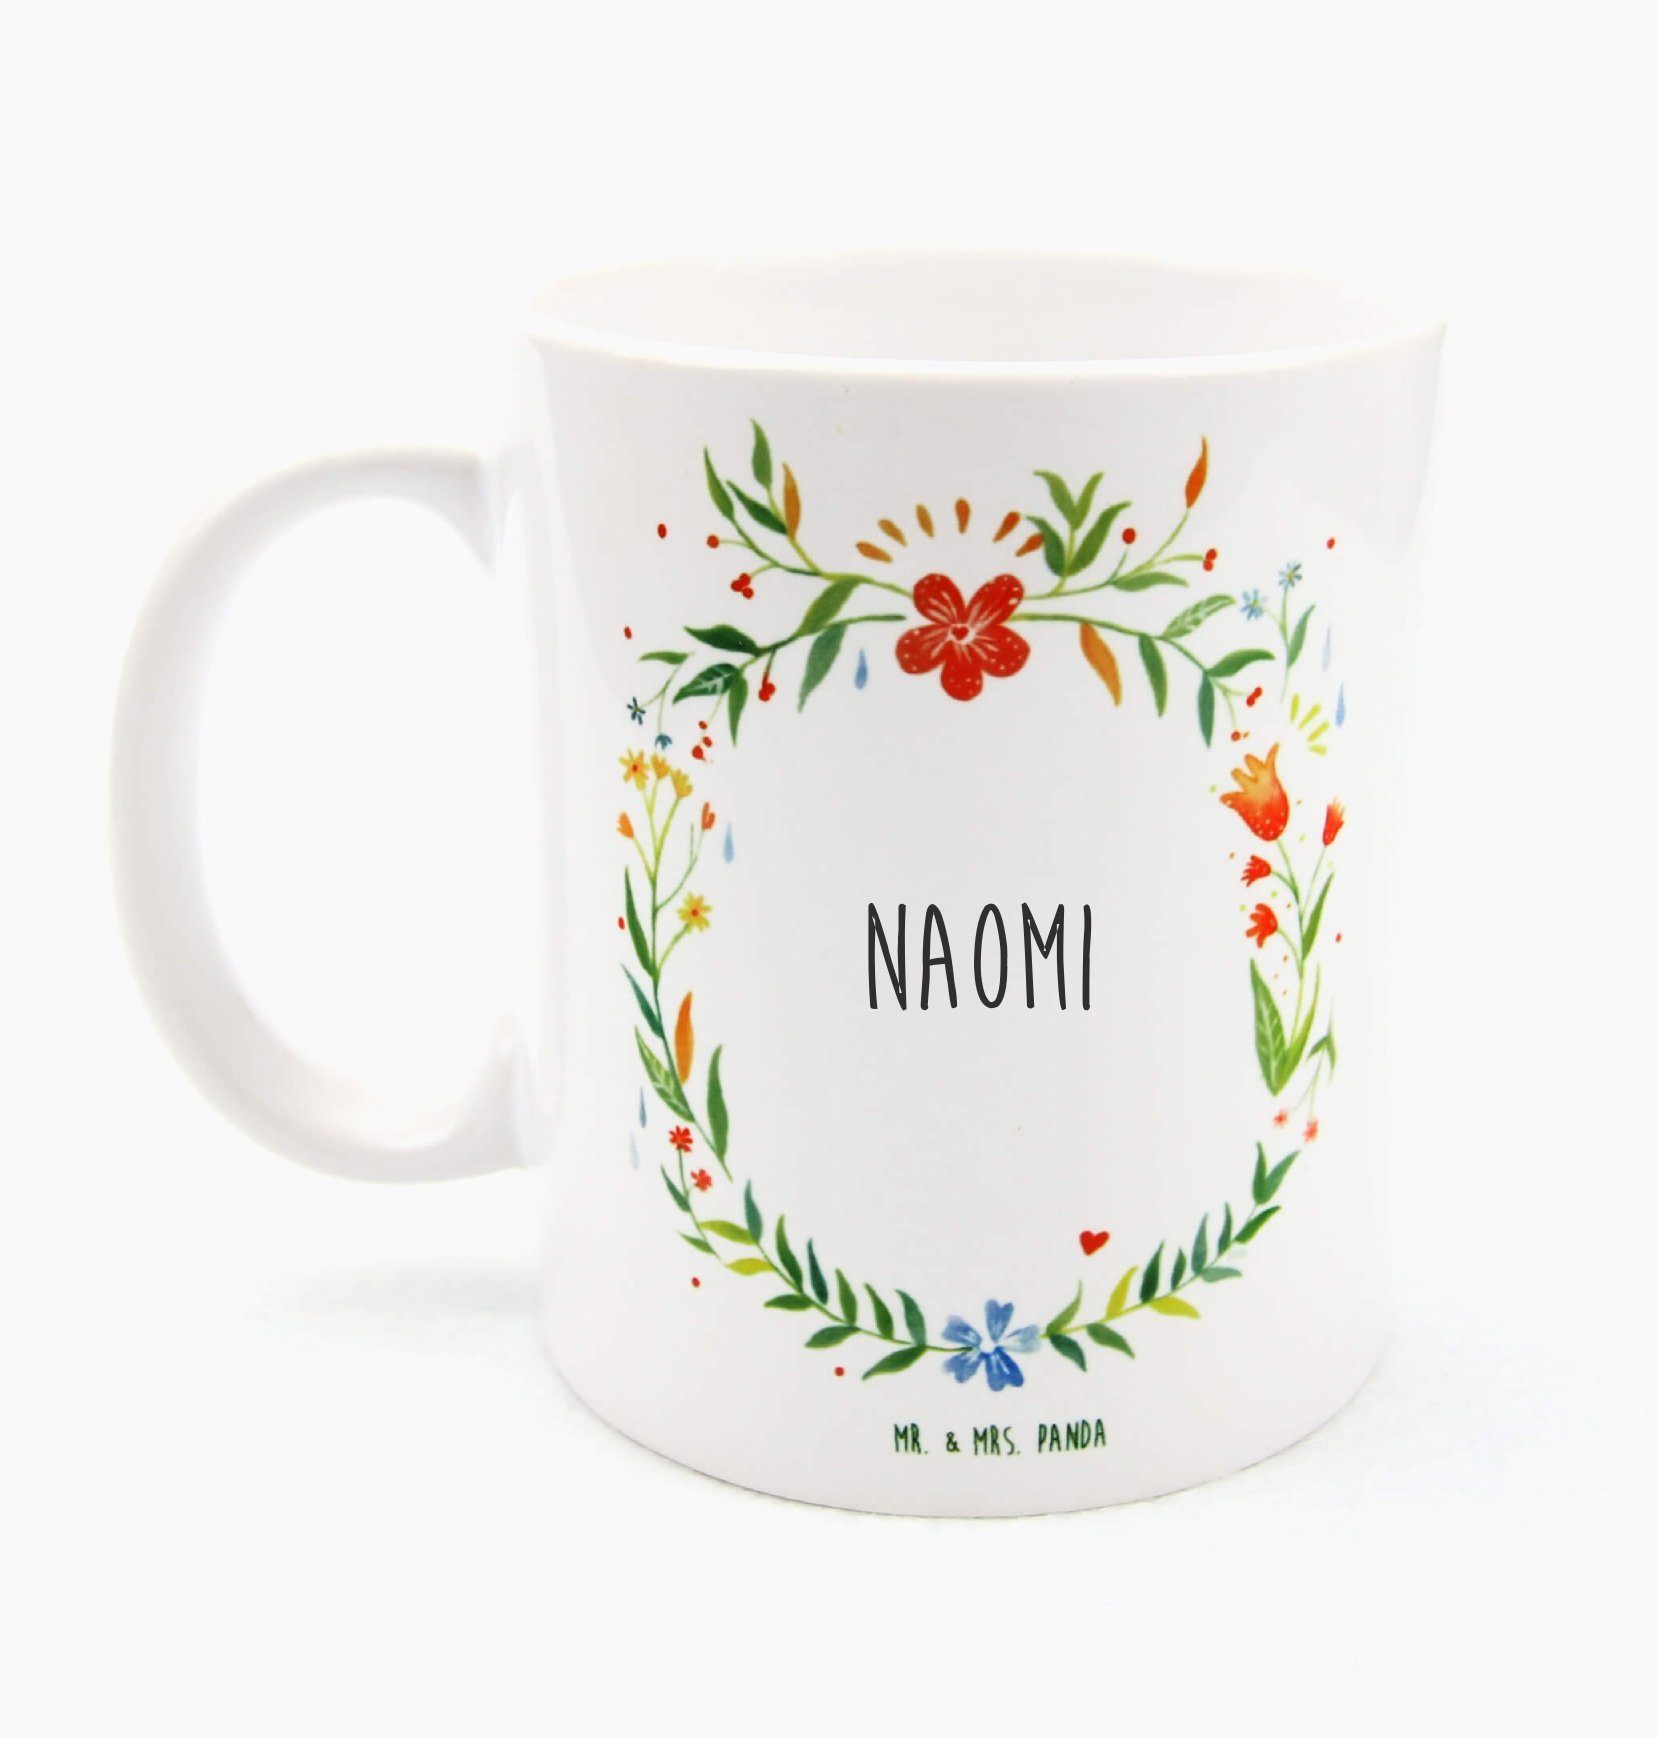 Mr. & Mrs. Panda Tasse Naomi - Geschenk, Tasse, Kaffeetasse, Teetasse, Tasse Motive, Teebech, Keramik